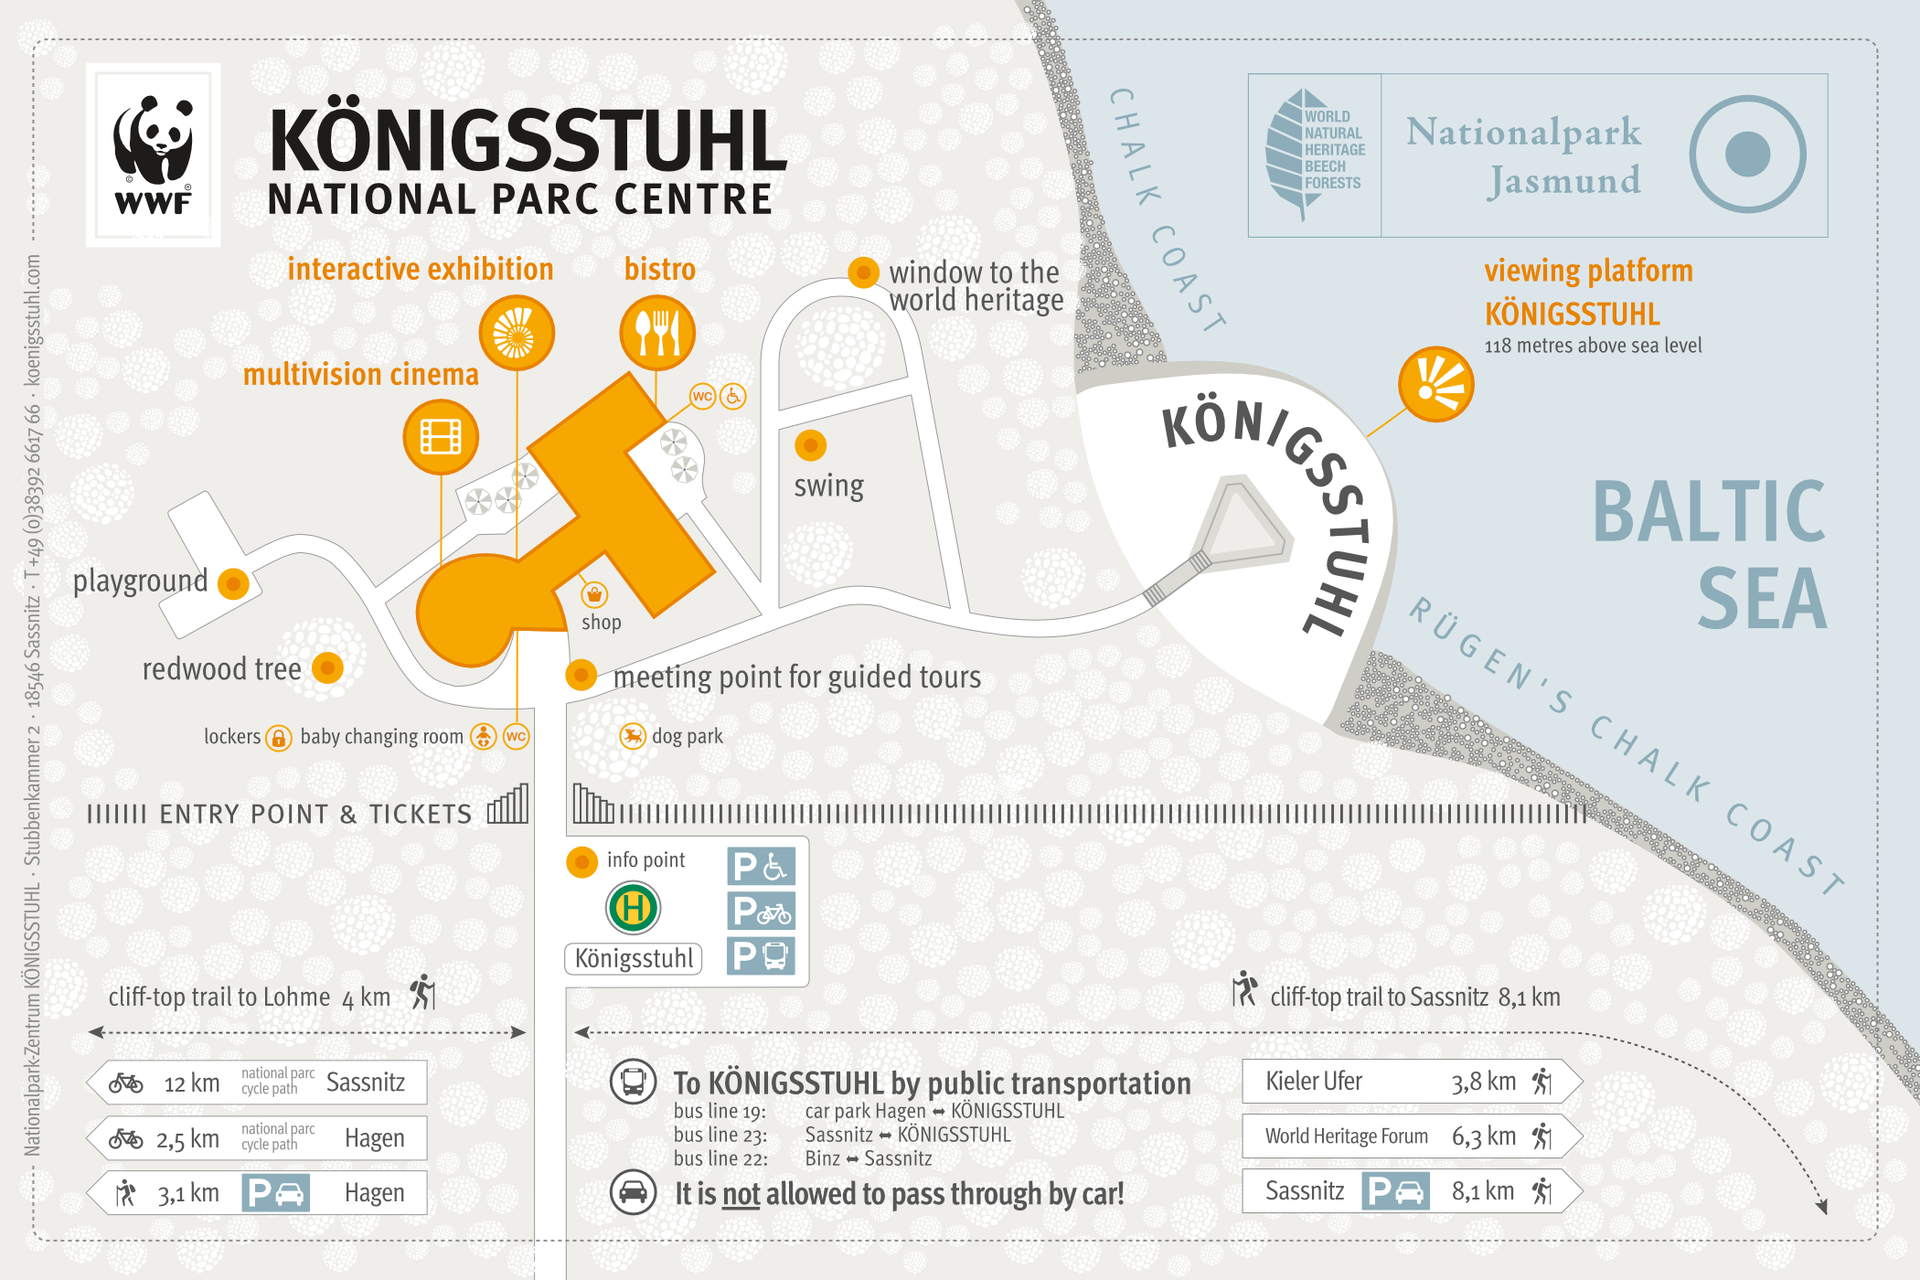 Sitemap of KOENIGSSTUHL National Parc Centre